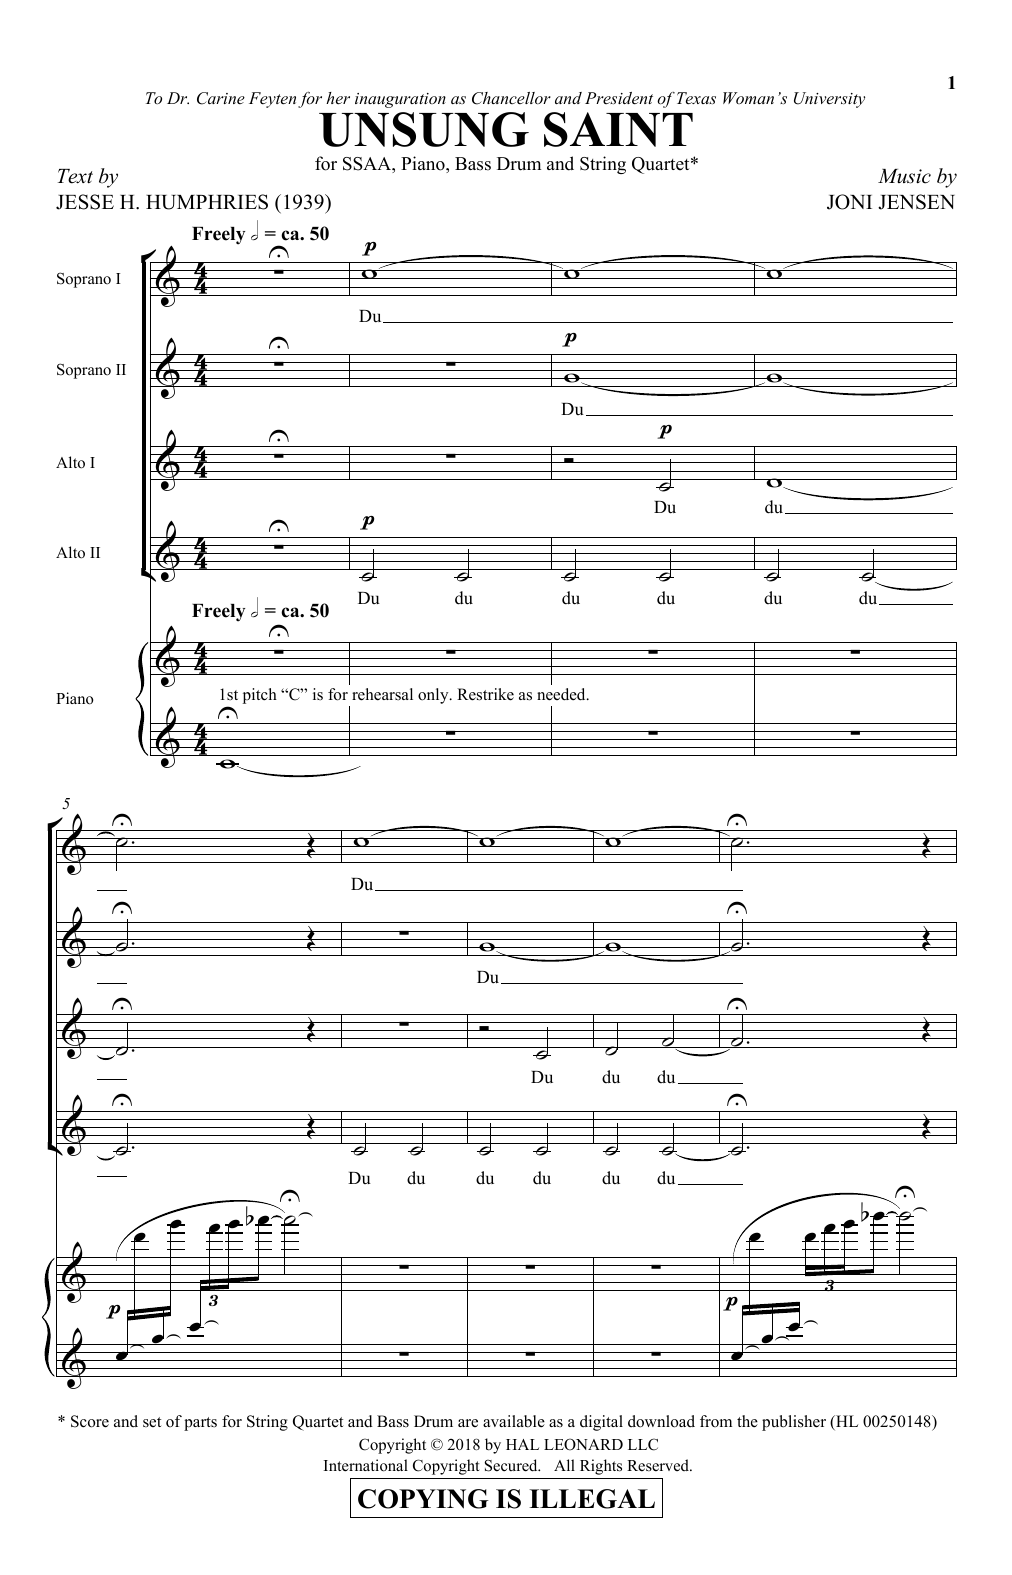 Joni Jensen Unsung Saint Sheet Music Notes & Chords for SSA Choir - Download or Print PDF